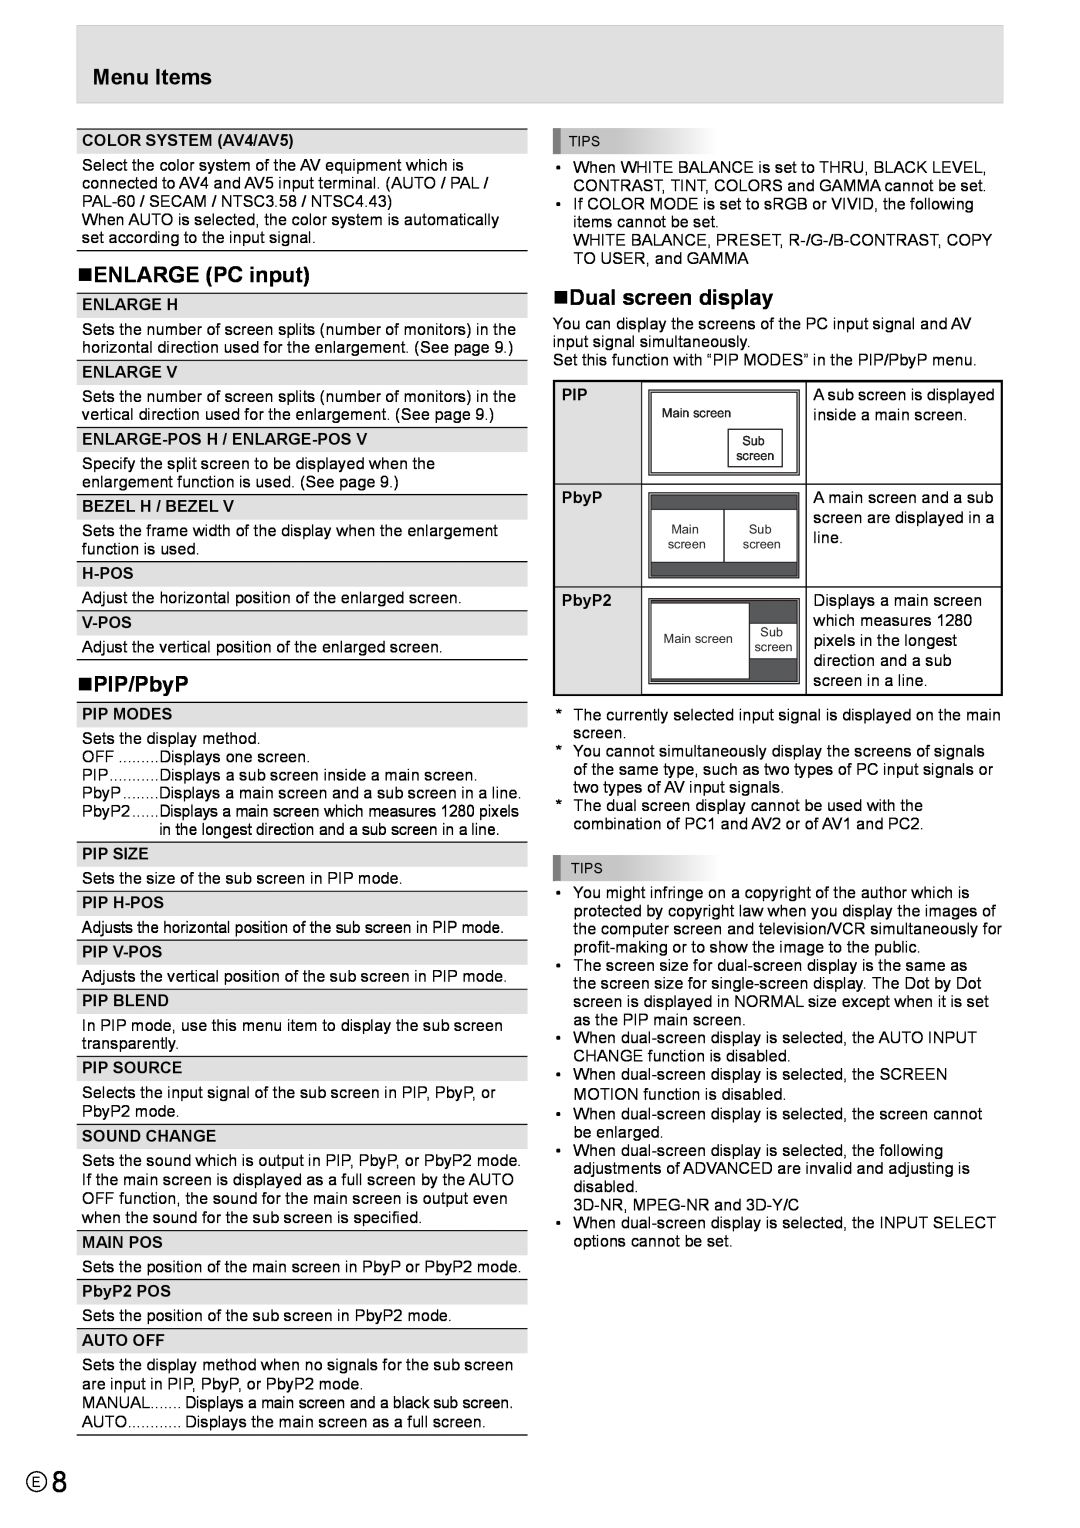 Mitsubishi Electronics MT819 „ENLARGE PC input, „PIP/PbyP, „Dual screen display, COLOR SYSTEM AV4/AV5, Enlarge H, Pip Size 